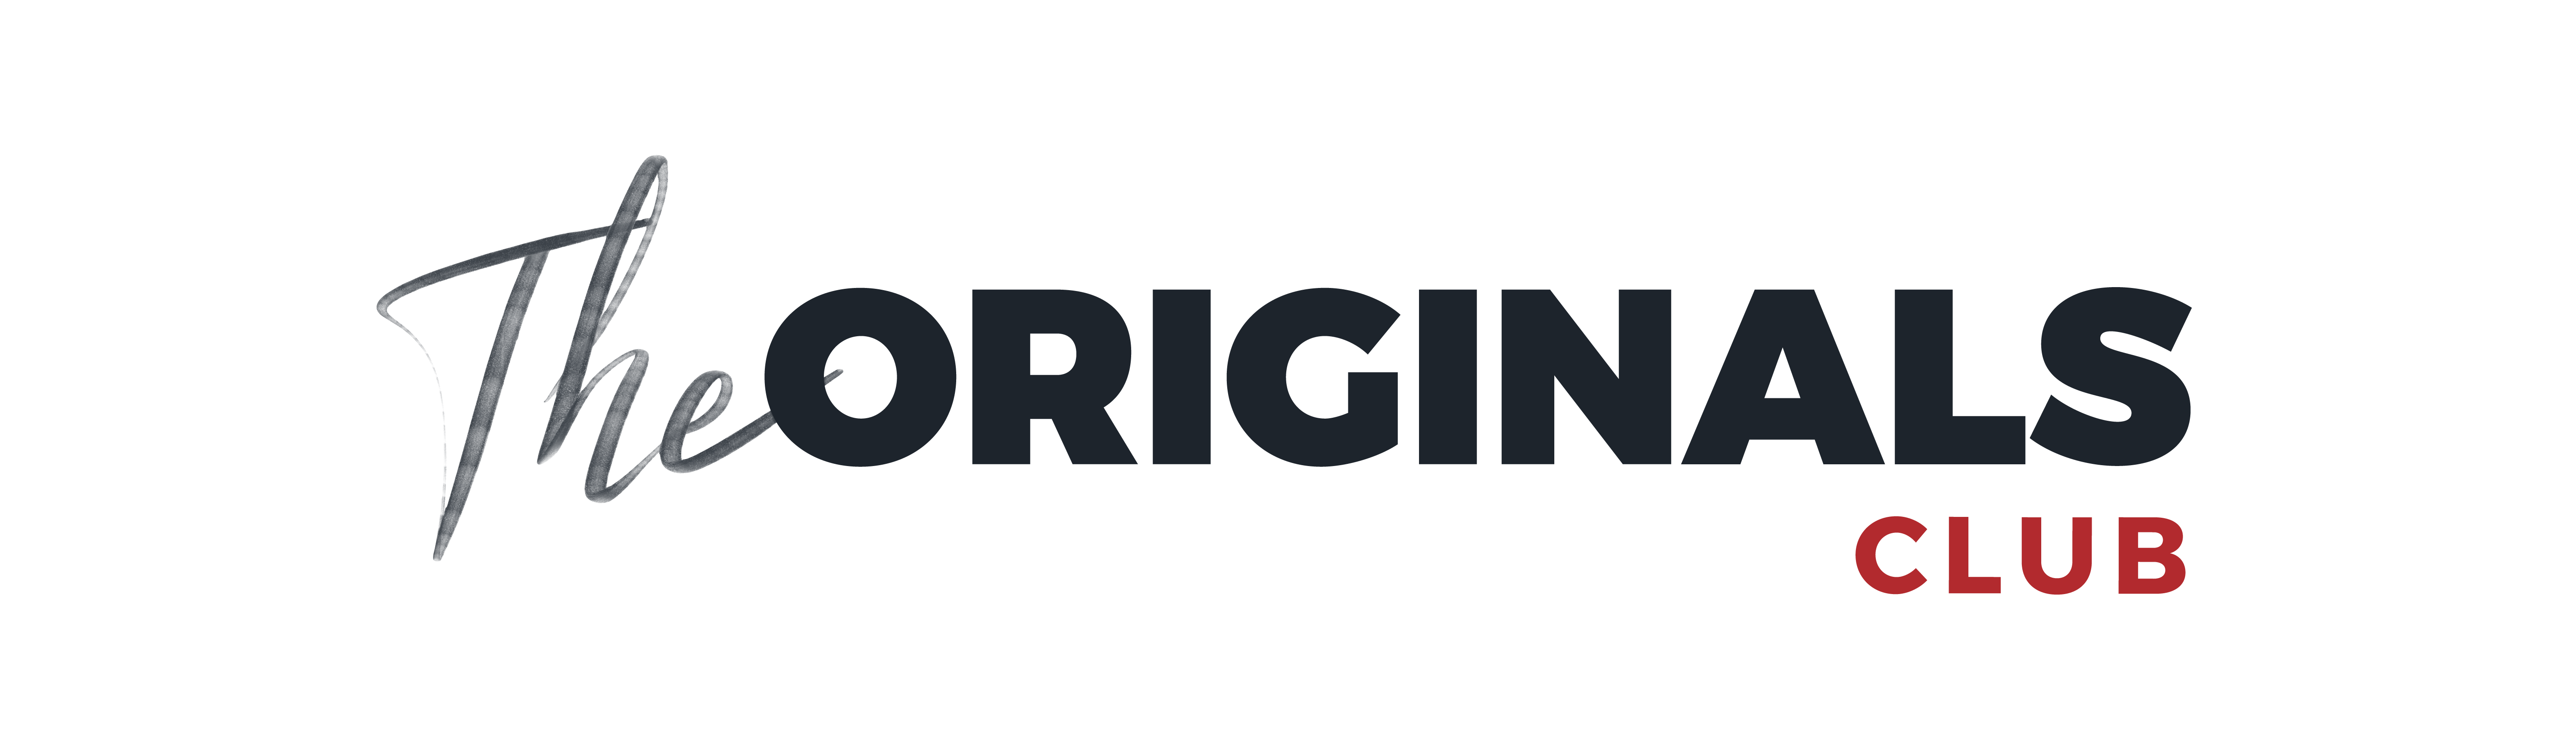 Badge Originals logo